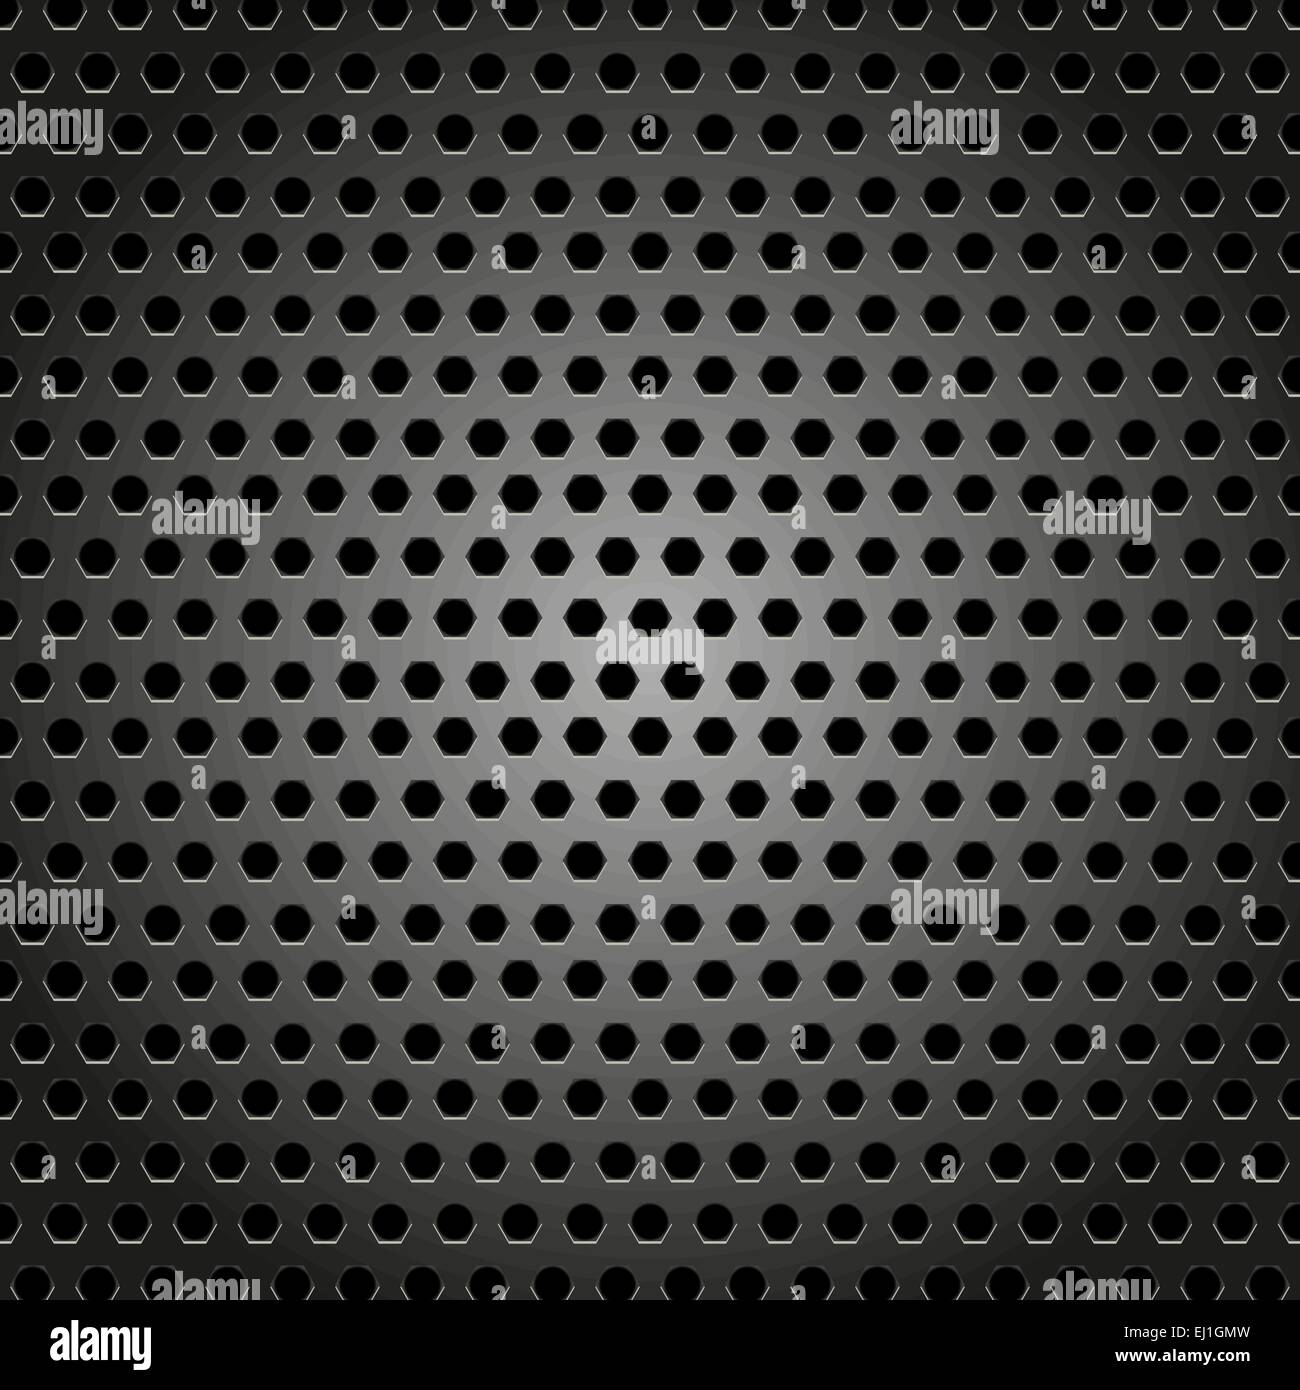 Abstract metal background design pattern hexagonal avec concept, vector illustration Illustration de Vecteur